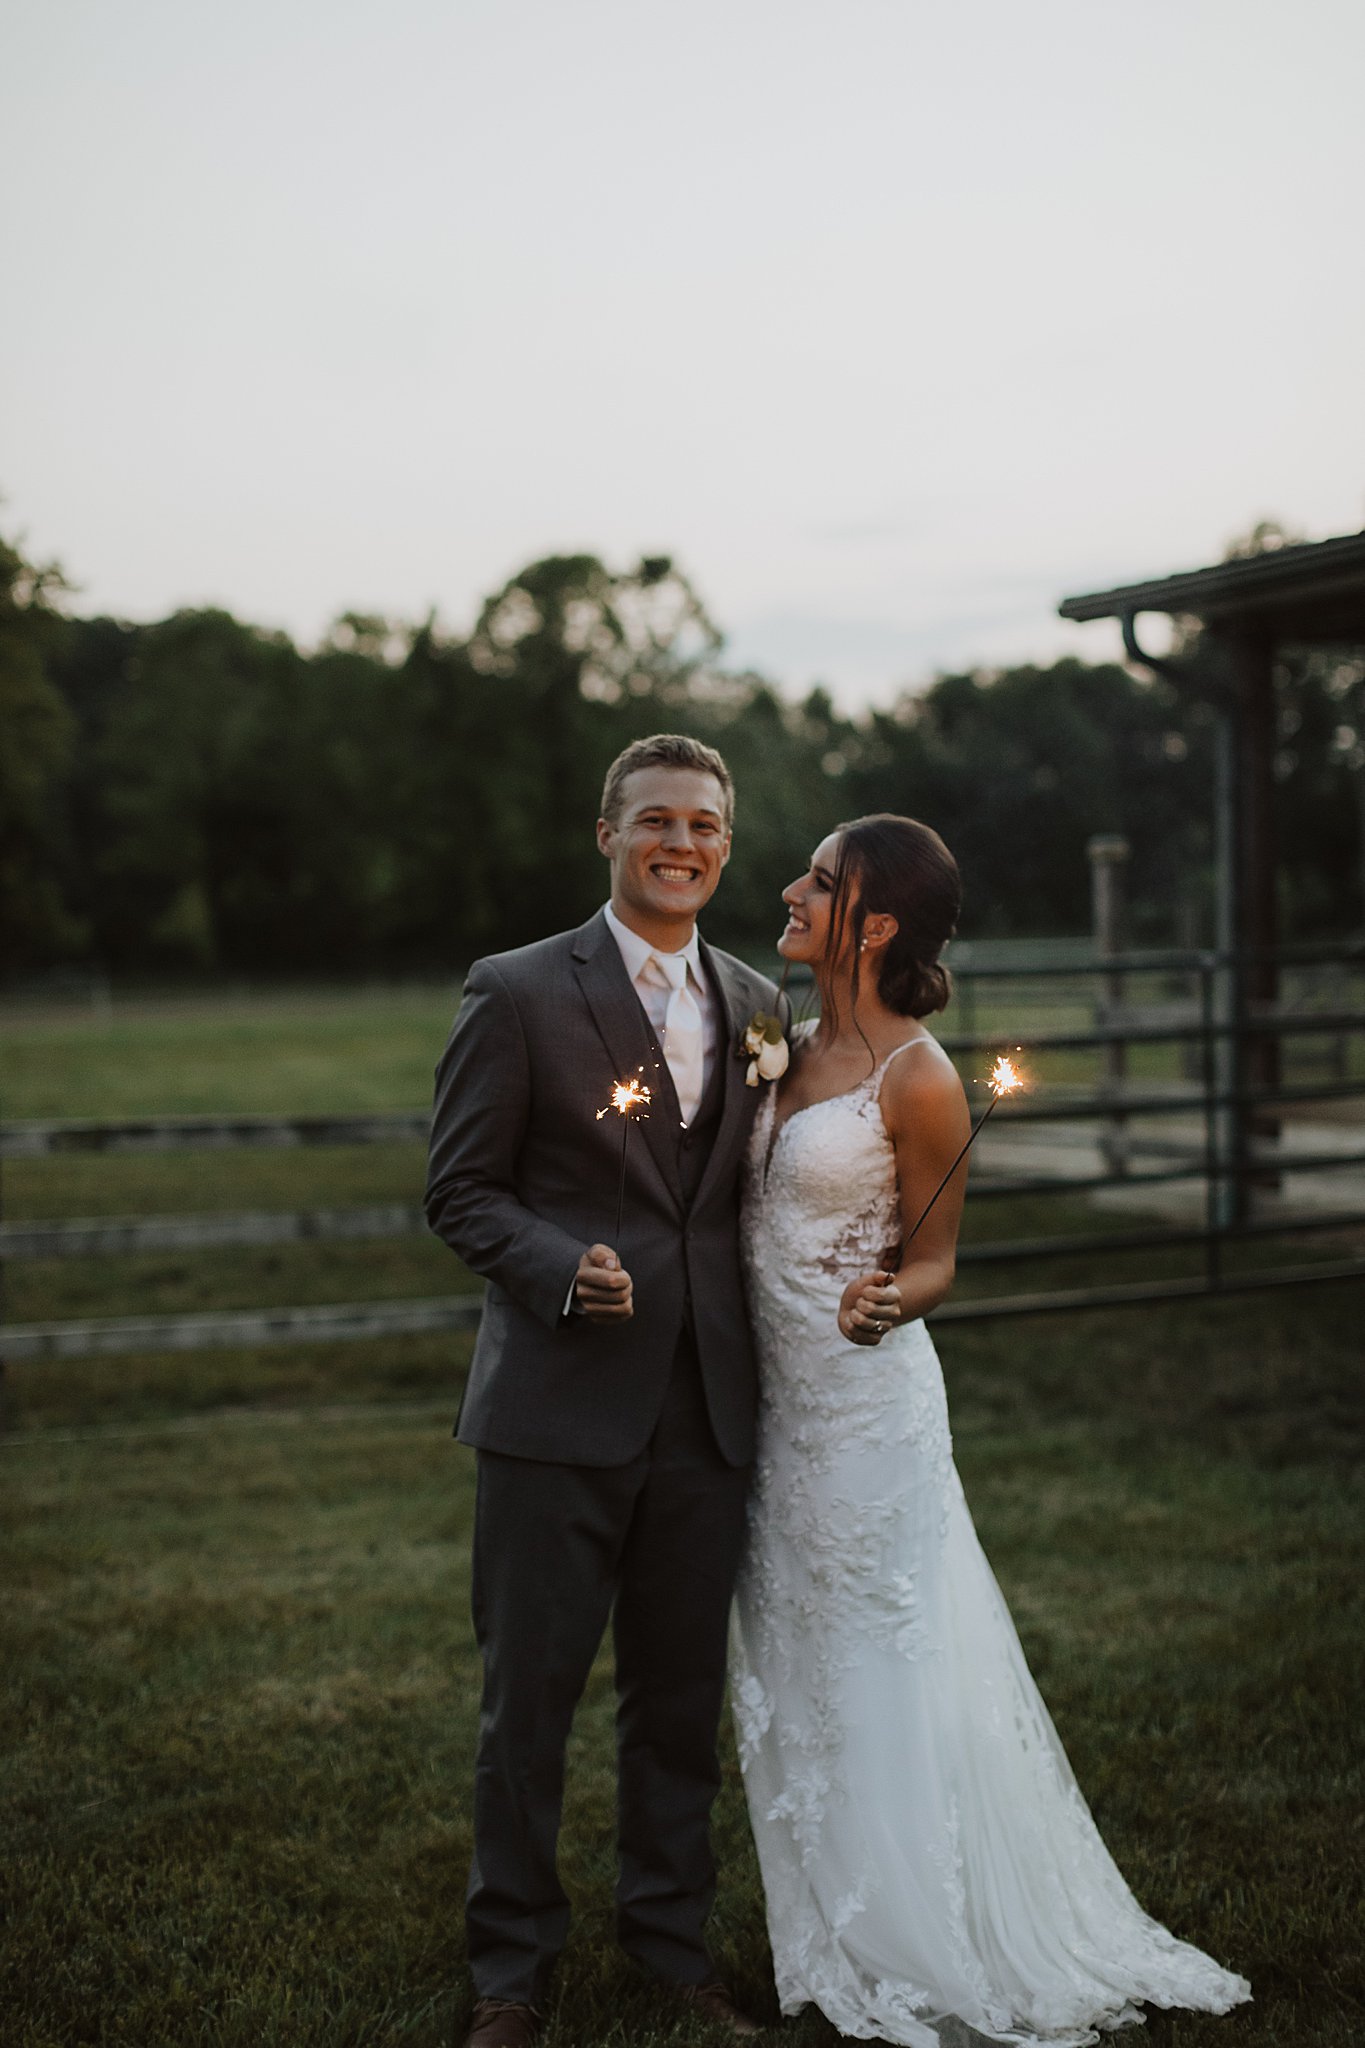 St. Louis Wedding | Sparkler Exit